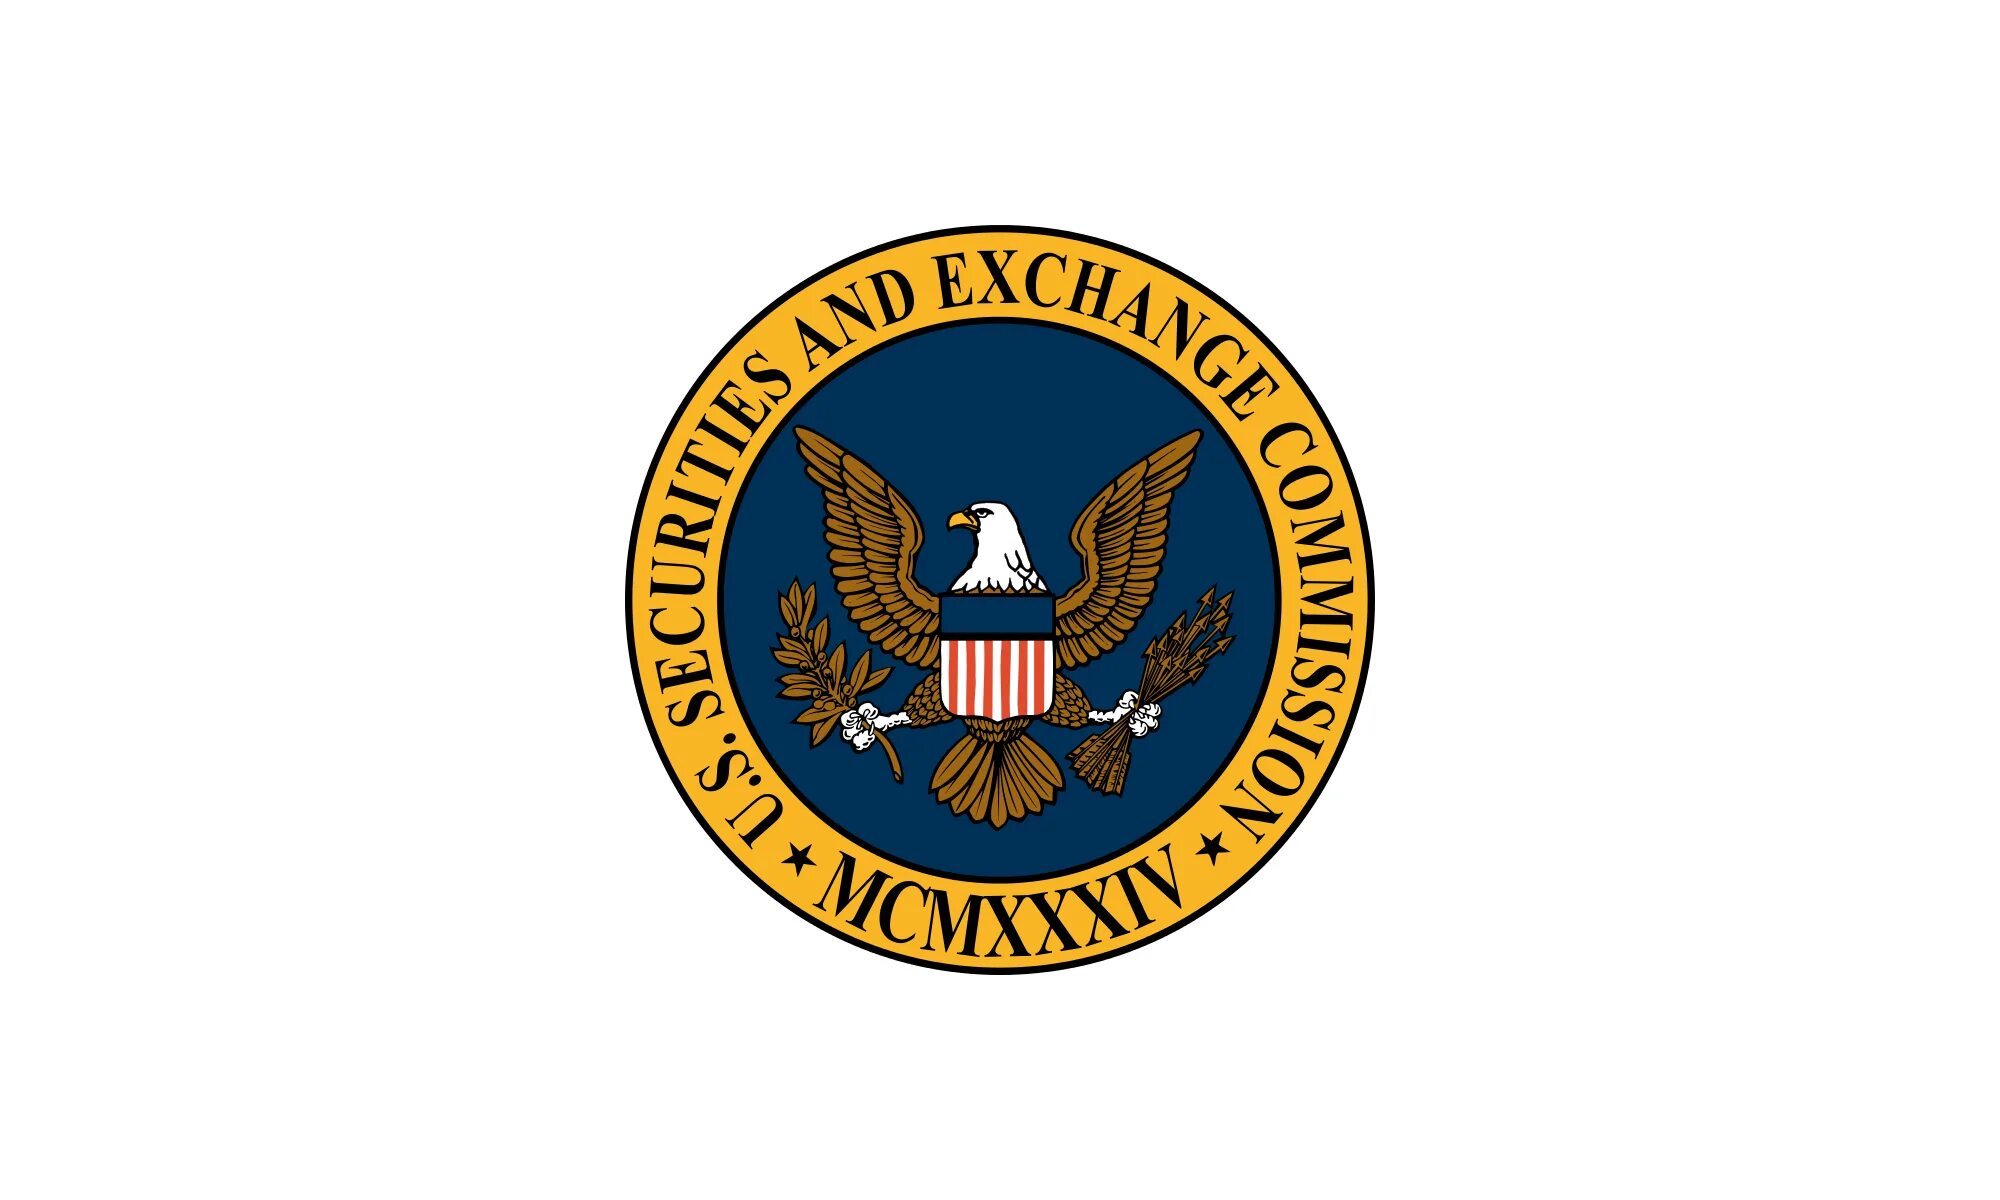 Комиссия по ценным бумагам и биржам sec. Комиссия по ценным бумагам США. Комиссия по ценным бумагам и биржам США лого. Sec логотип.